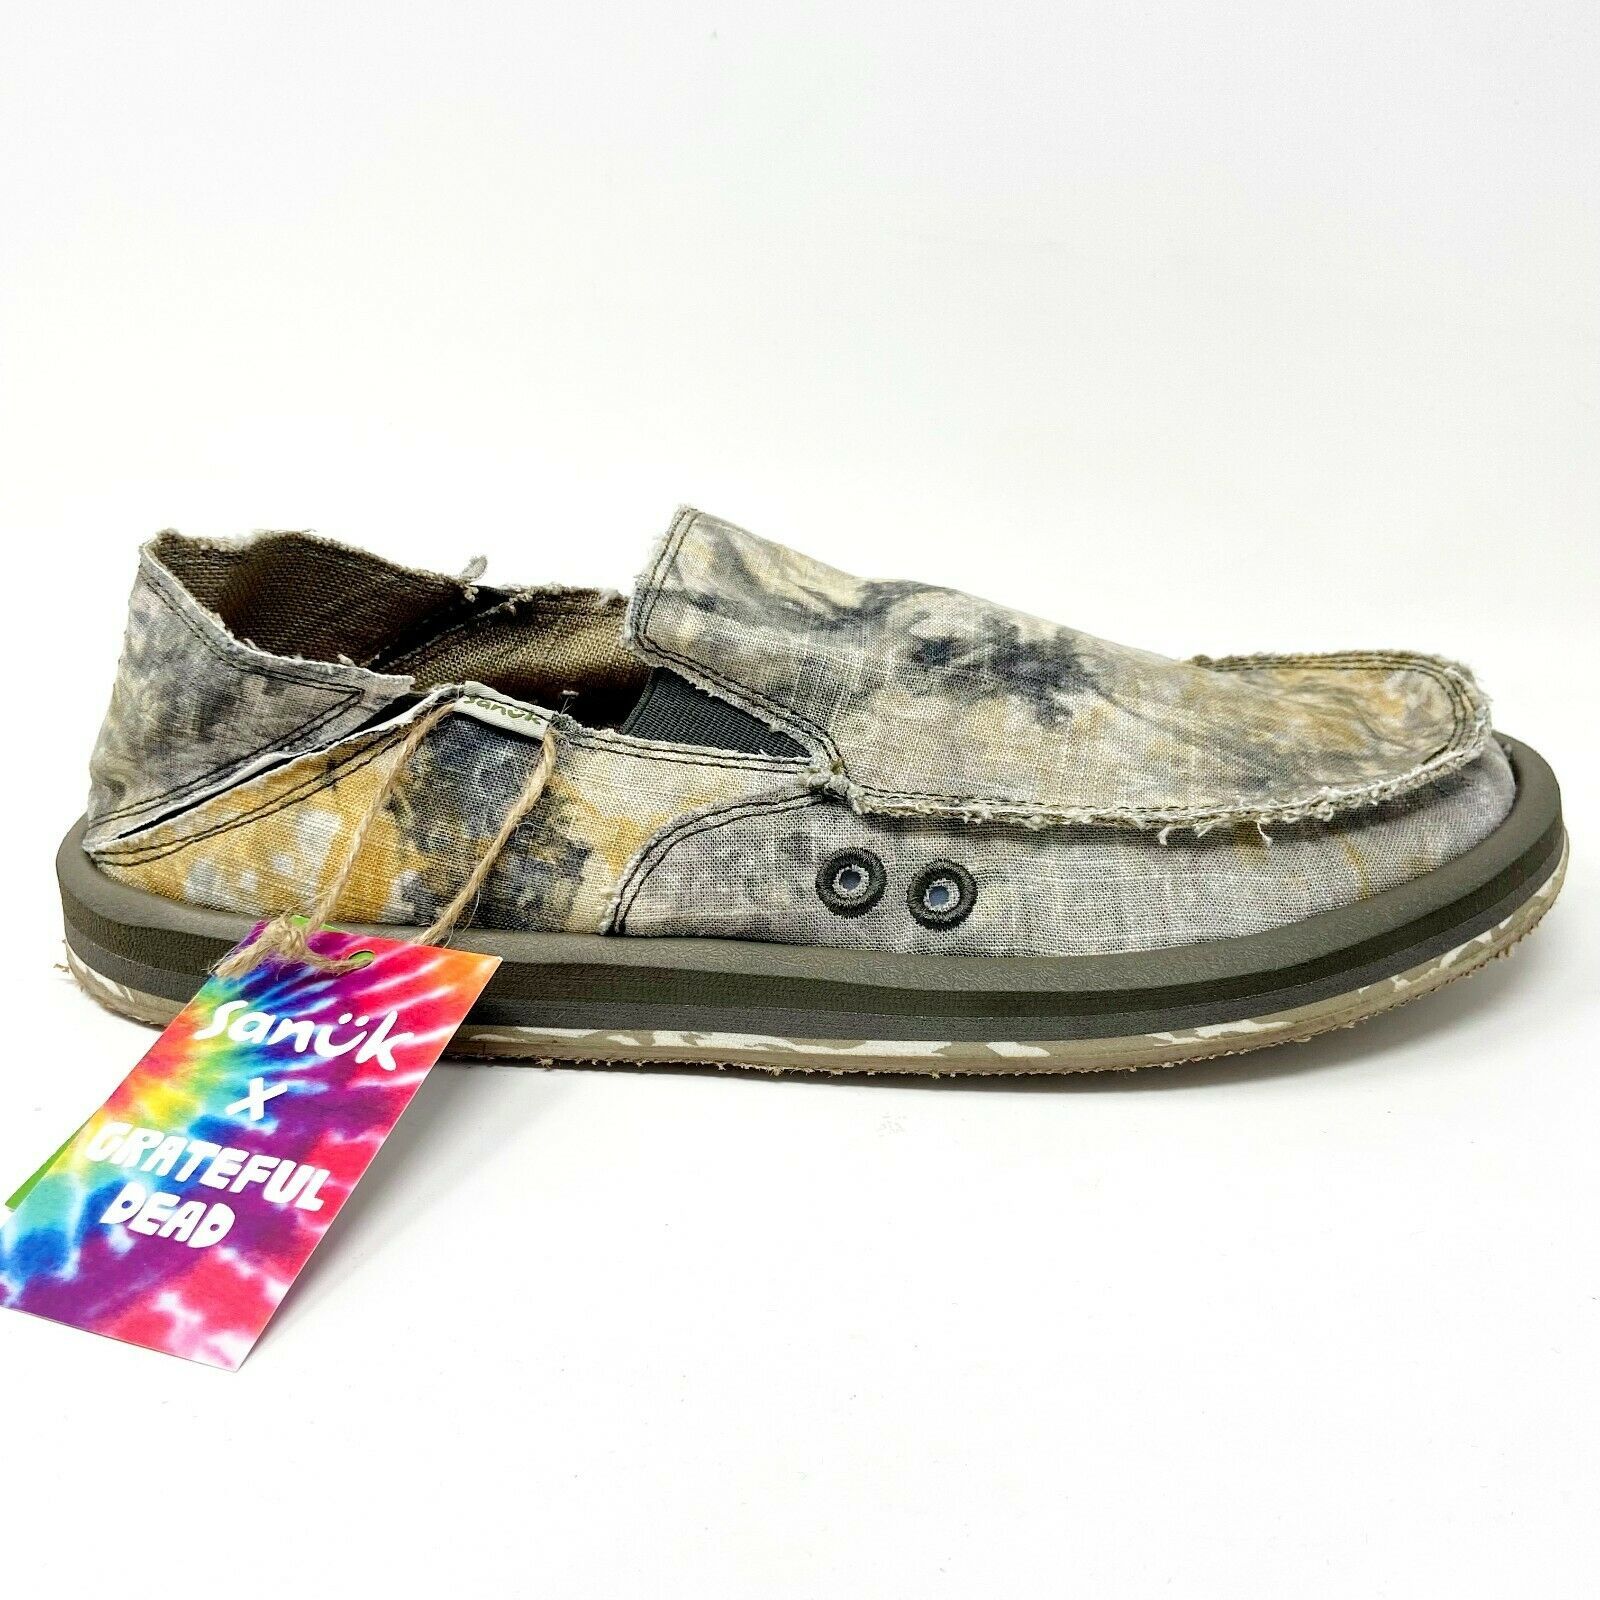 Sanuk x Grateful Dead Vagabond ST Tie Dye Hemp Casual Sneakers